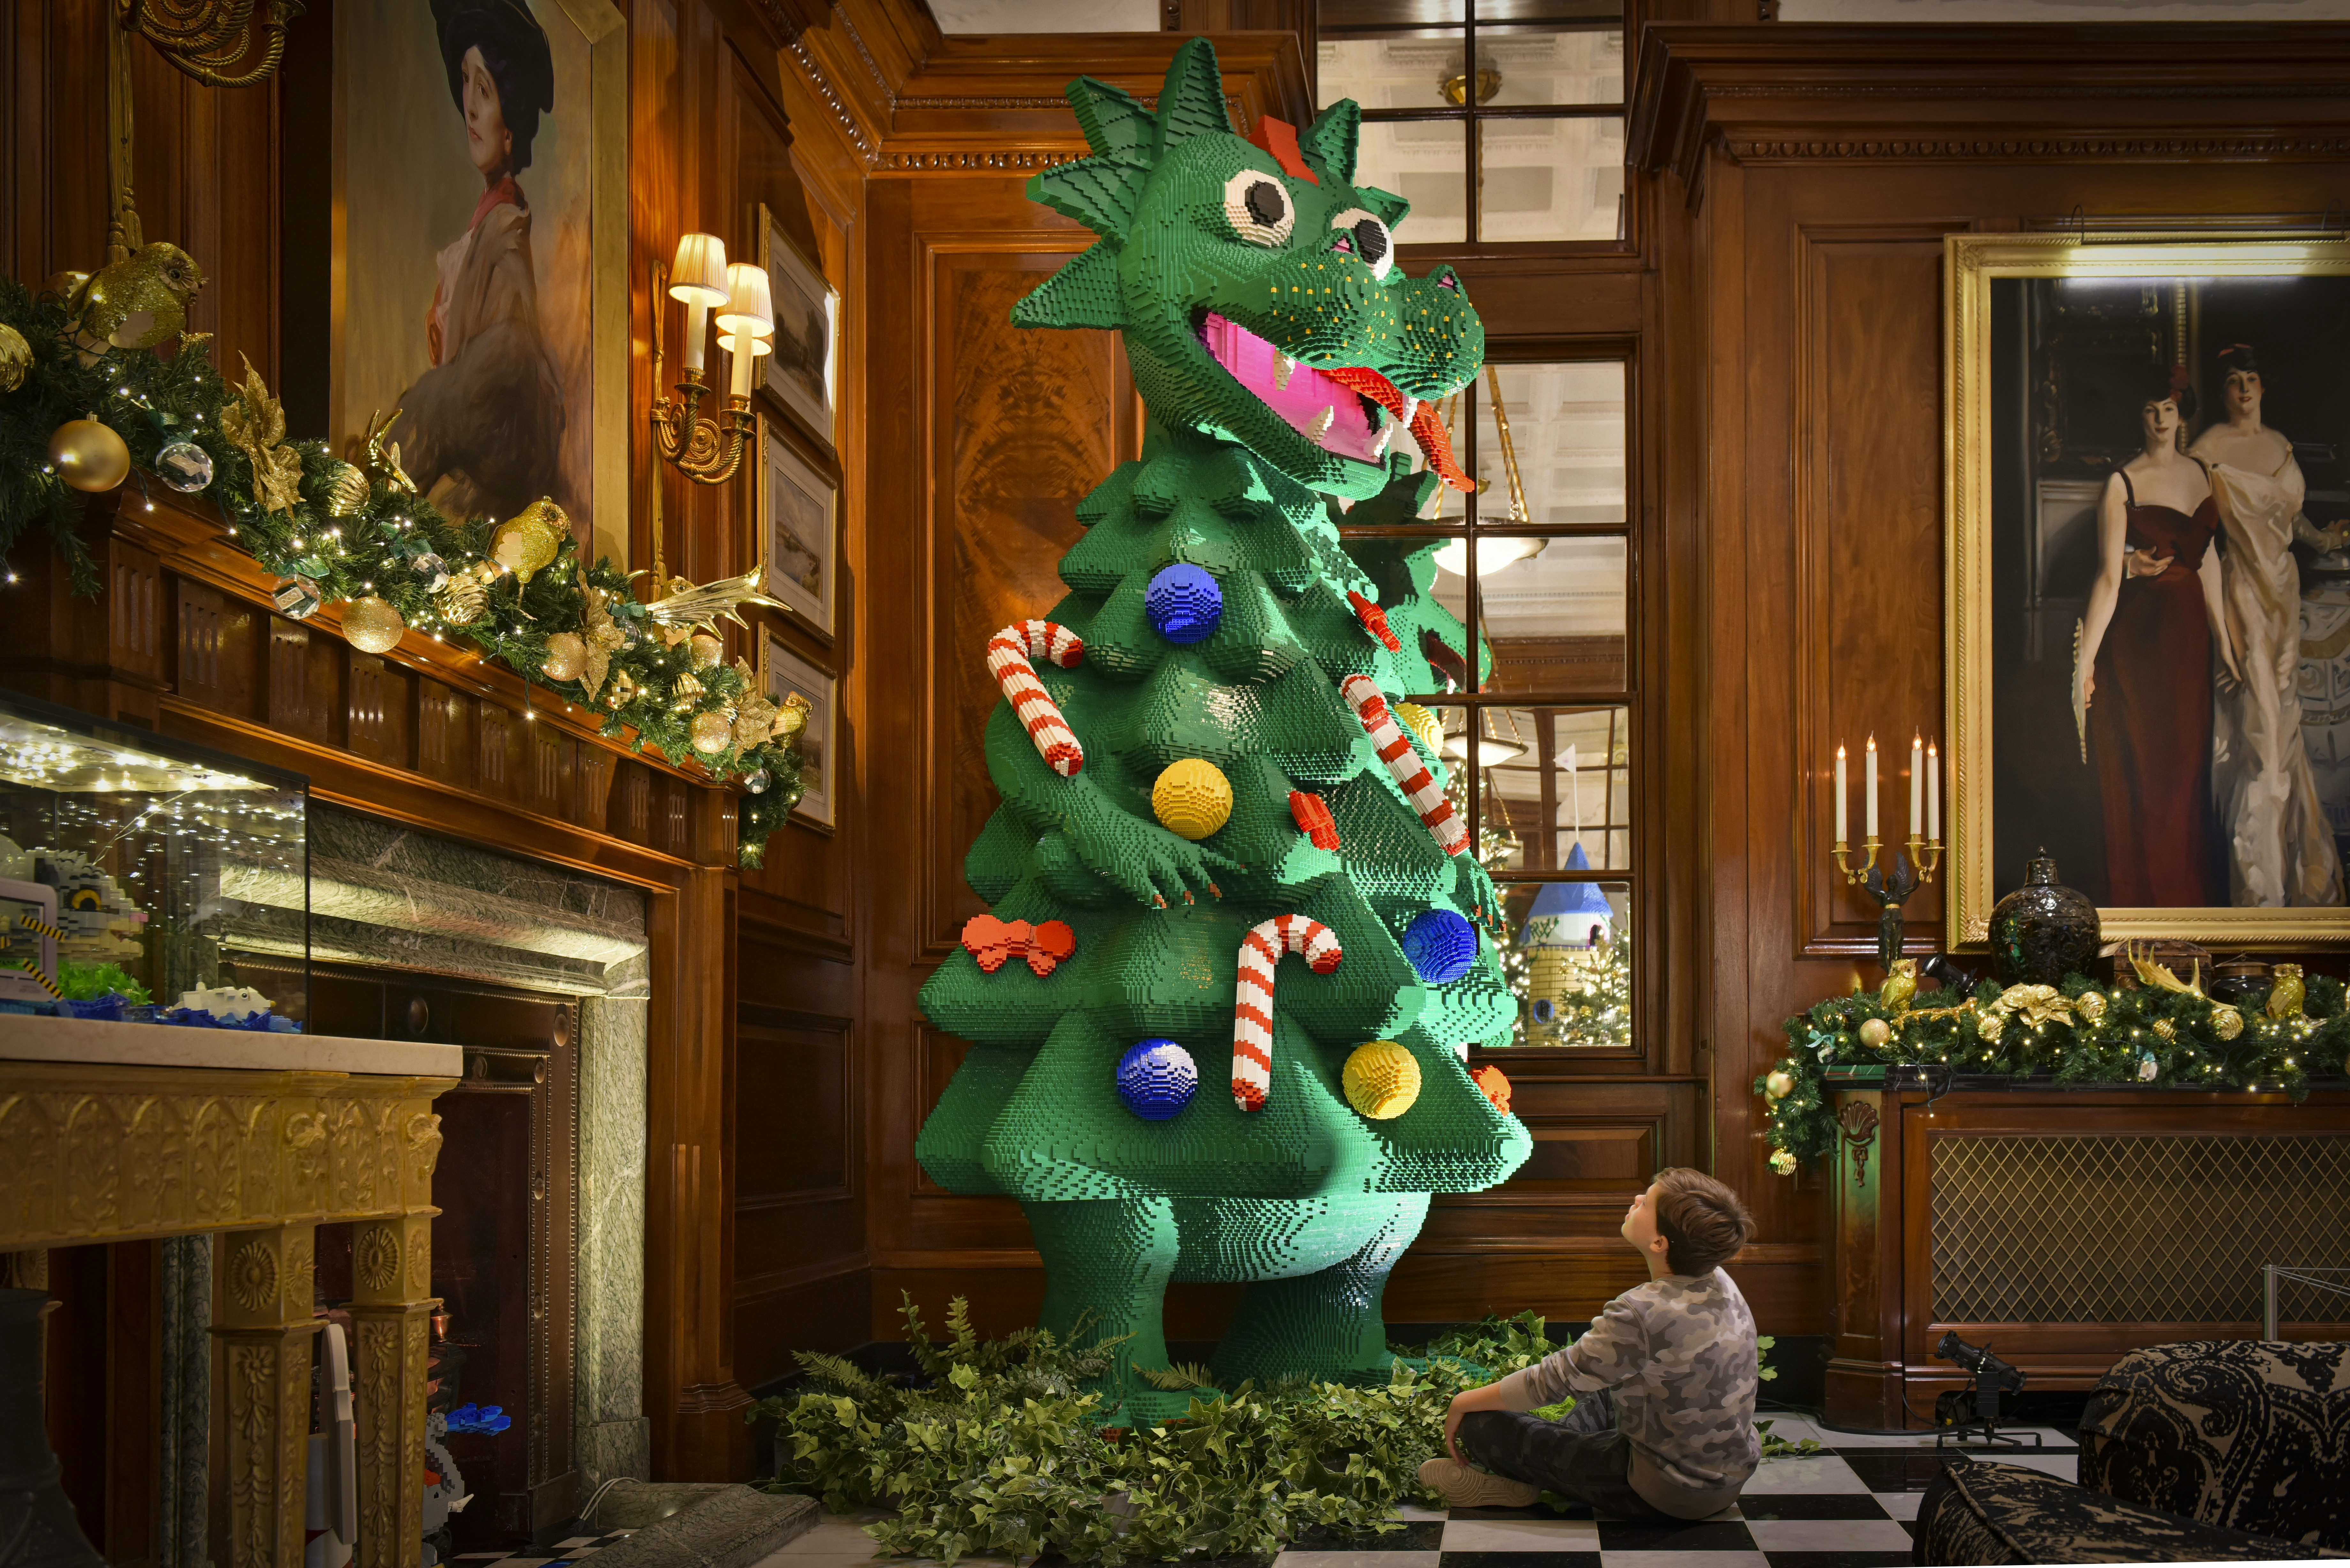 gigantic LEGO dragon Christmas tree at The Savoy London